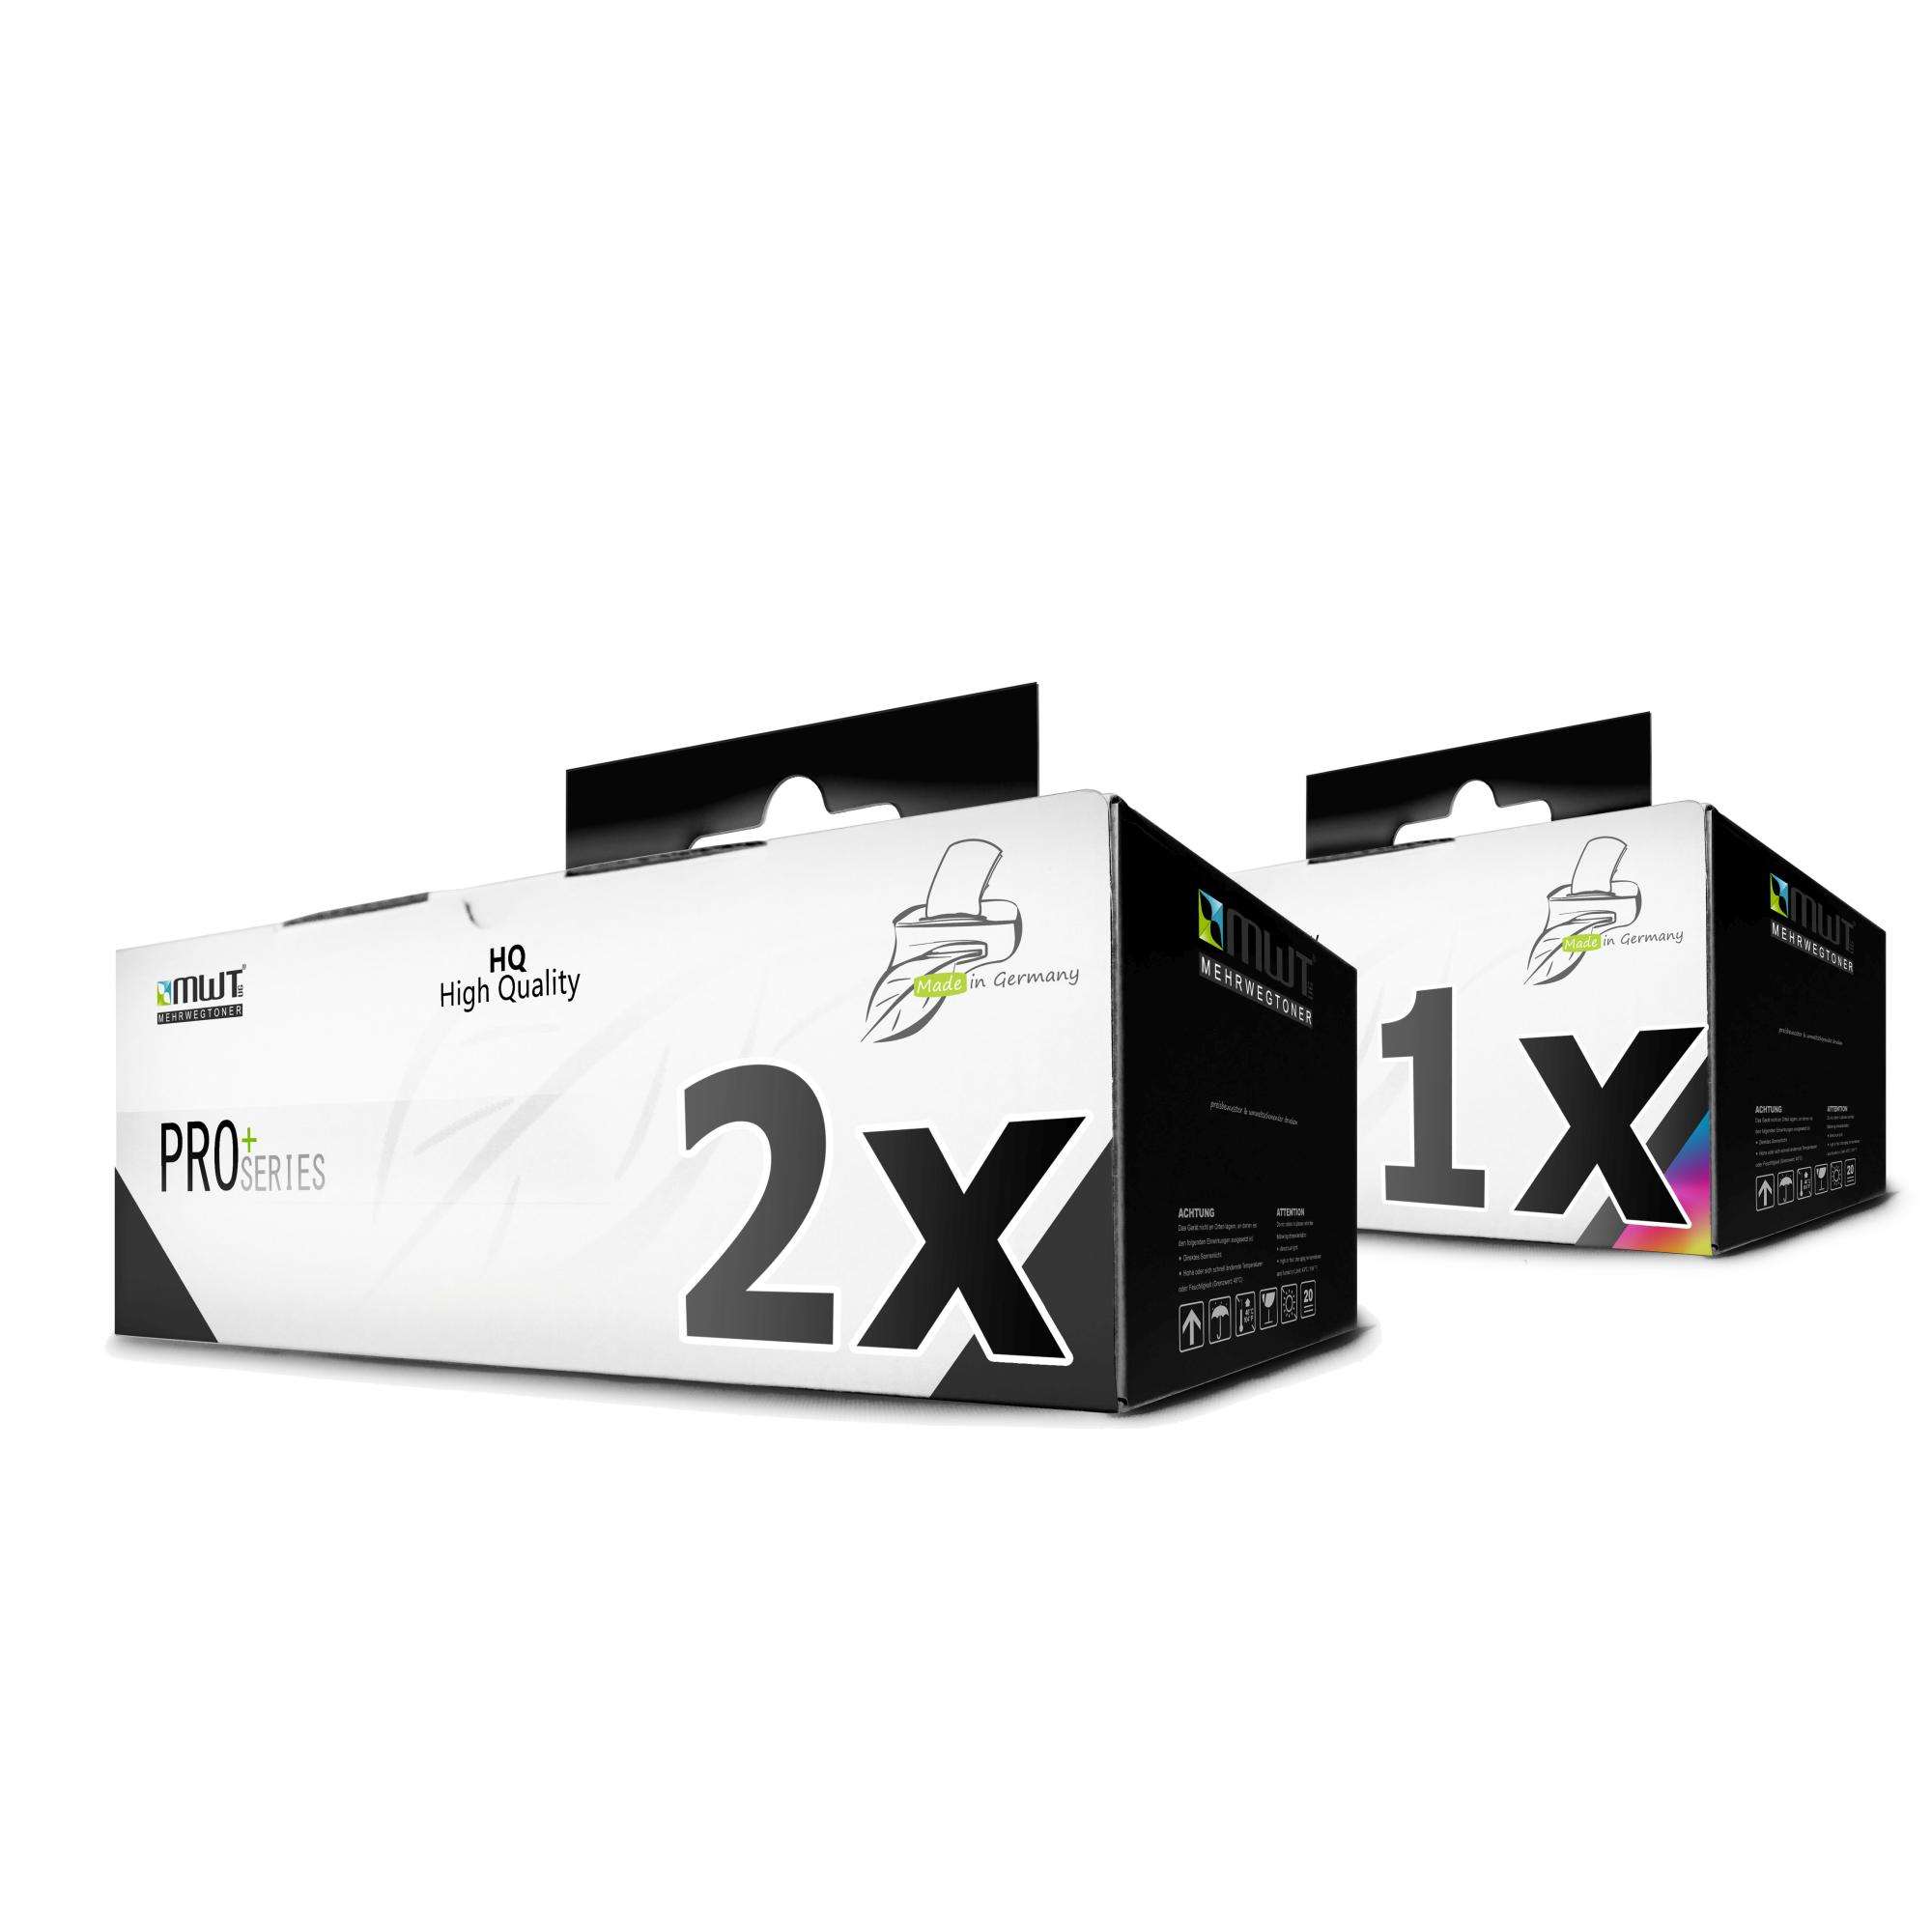 3x pro 2+1 cartridge for canon pixma mg-2450 mg-3050 mg-2550-s mg-3053 | eBay